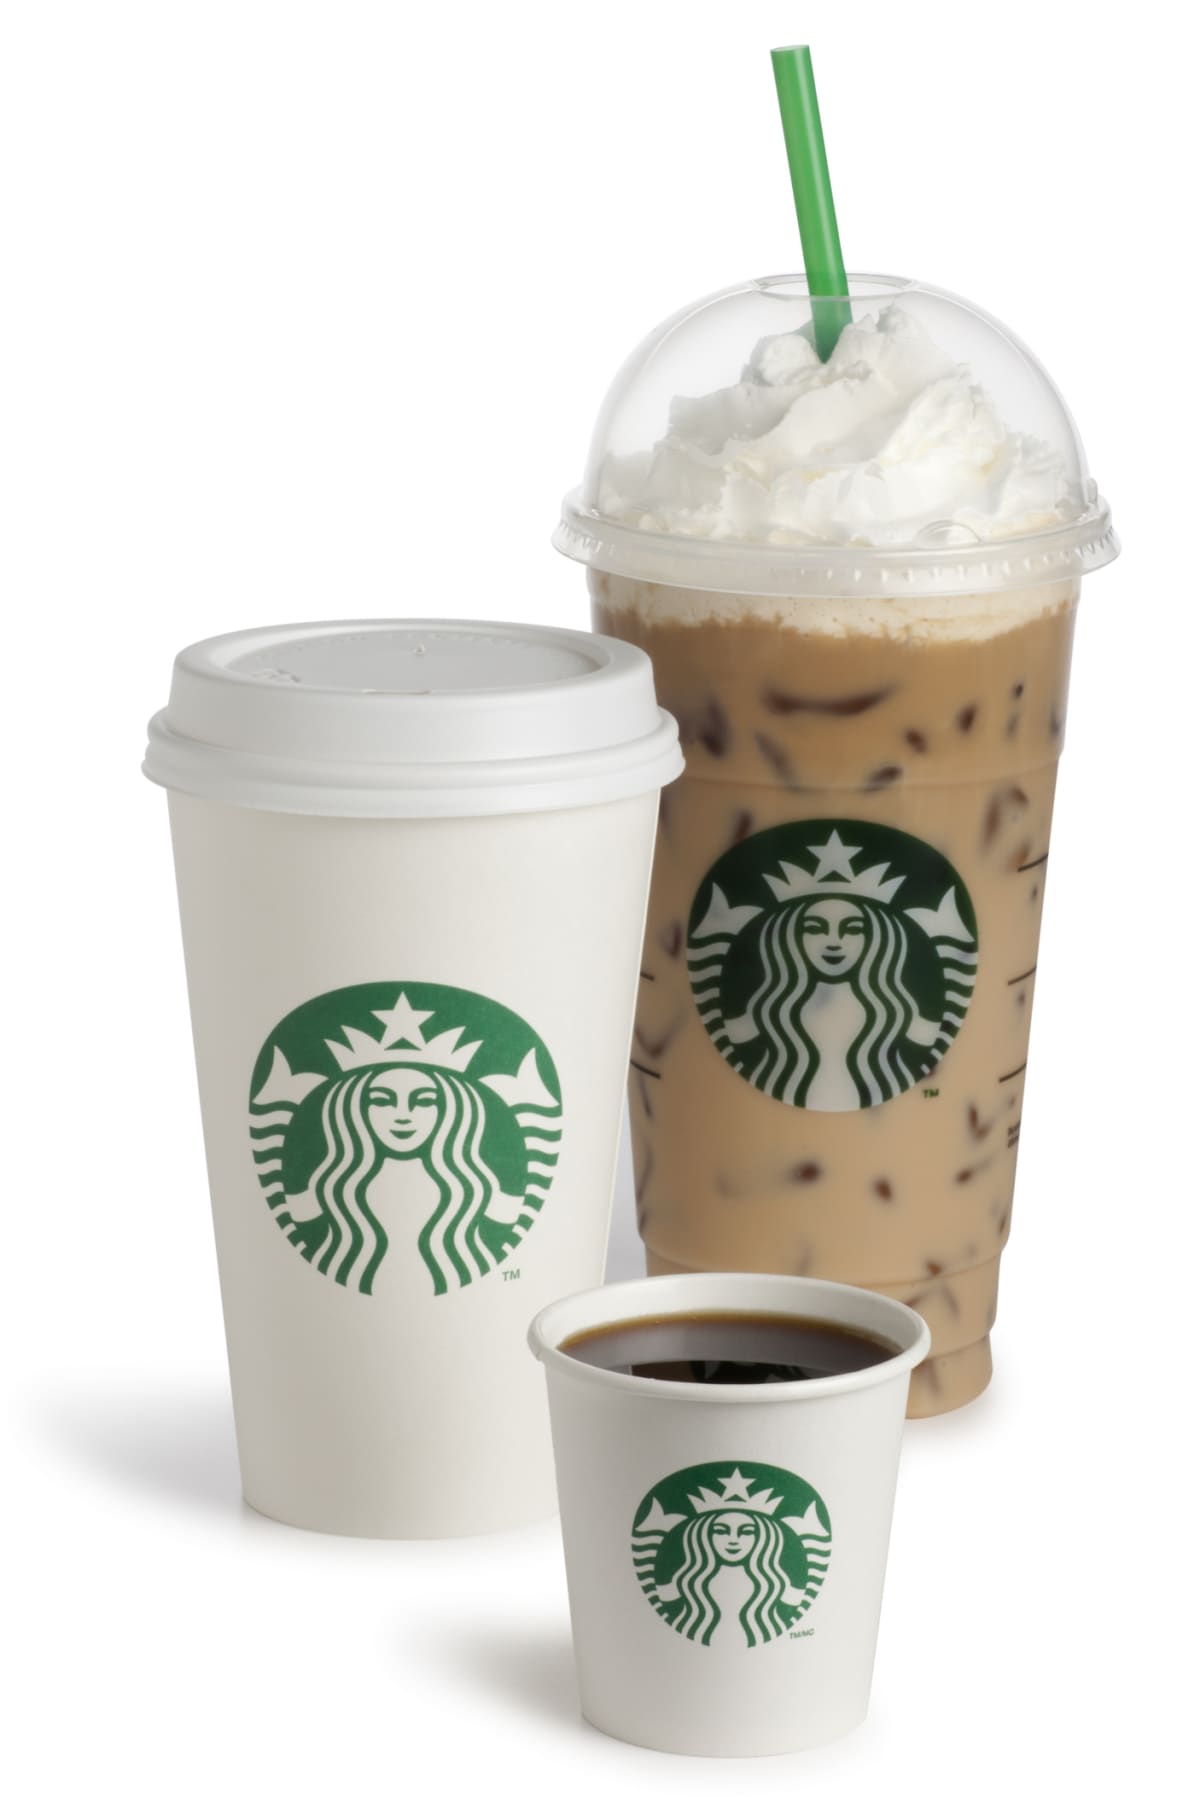 Three Starbucks drinks